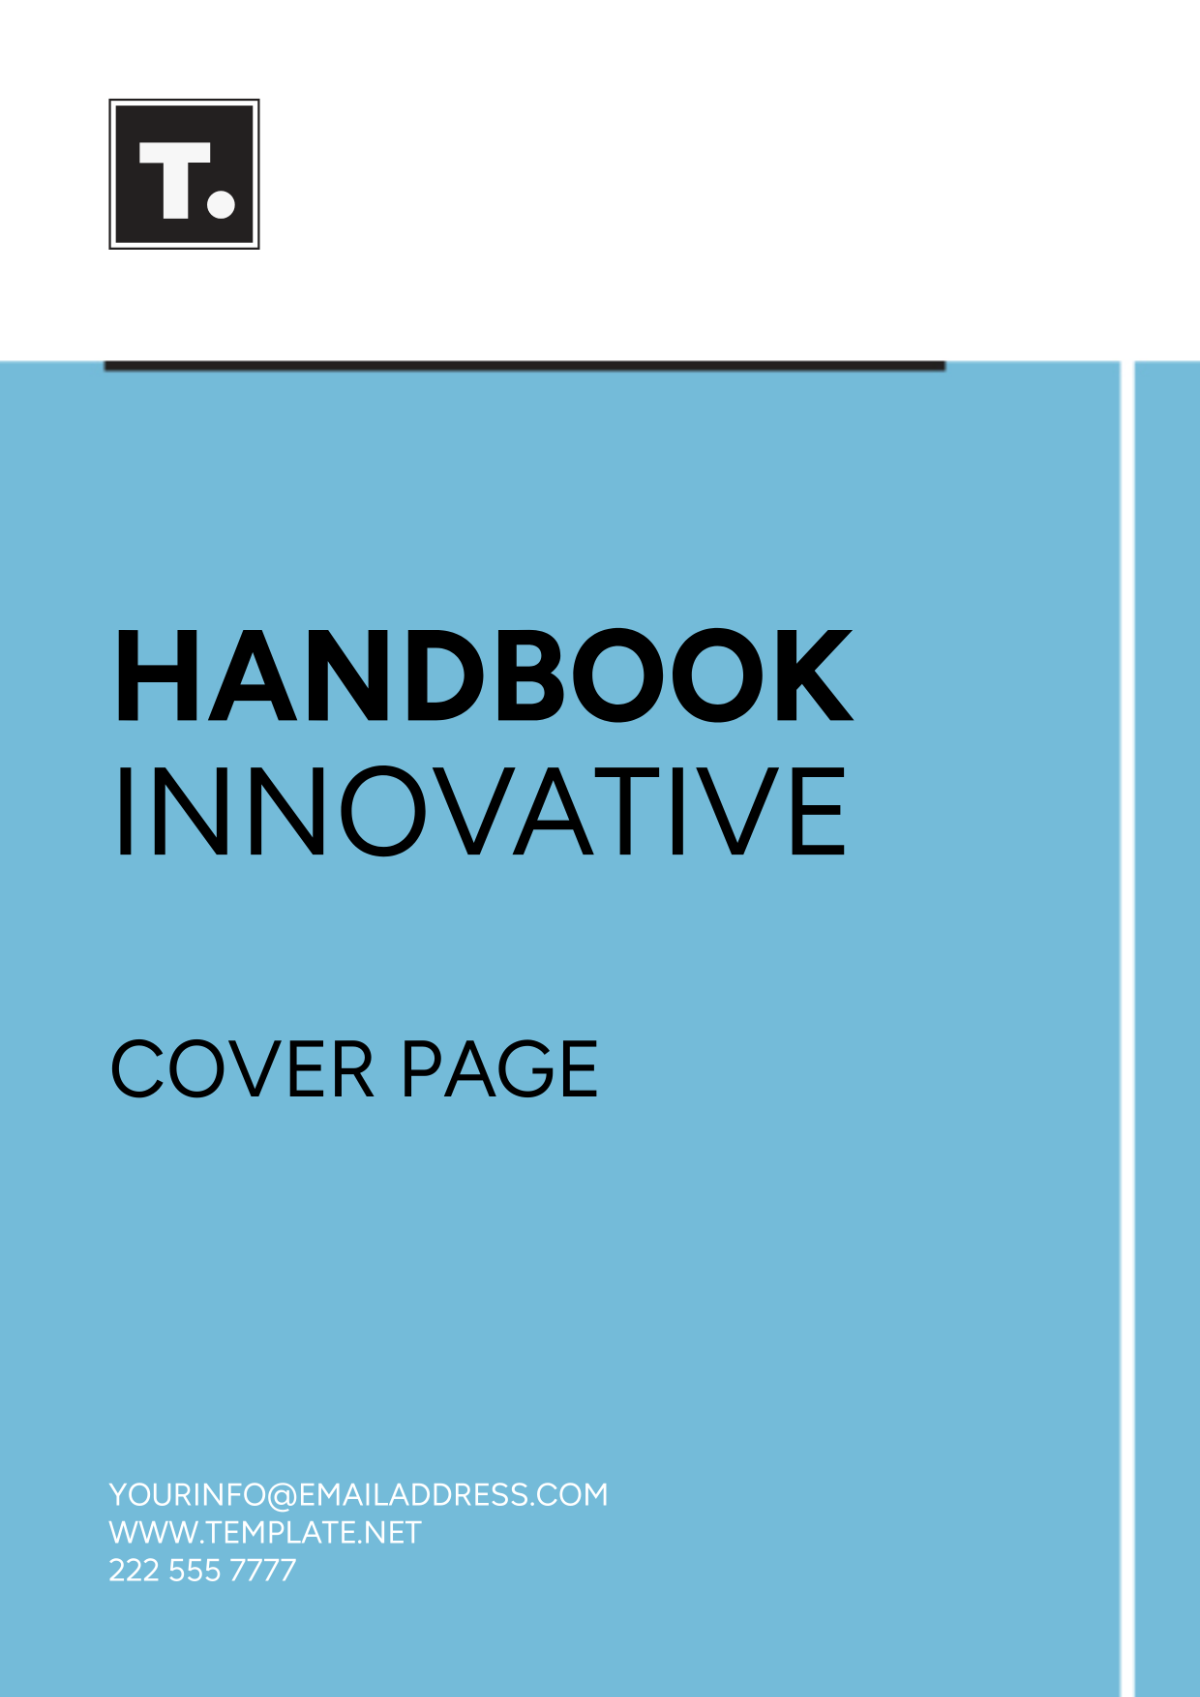 Handbook Innovative Cover Page